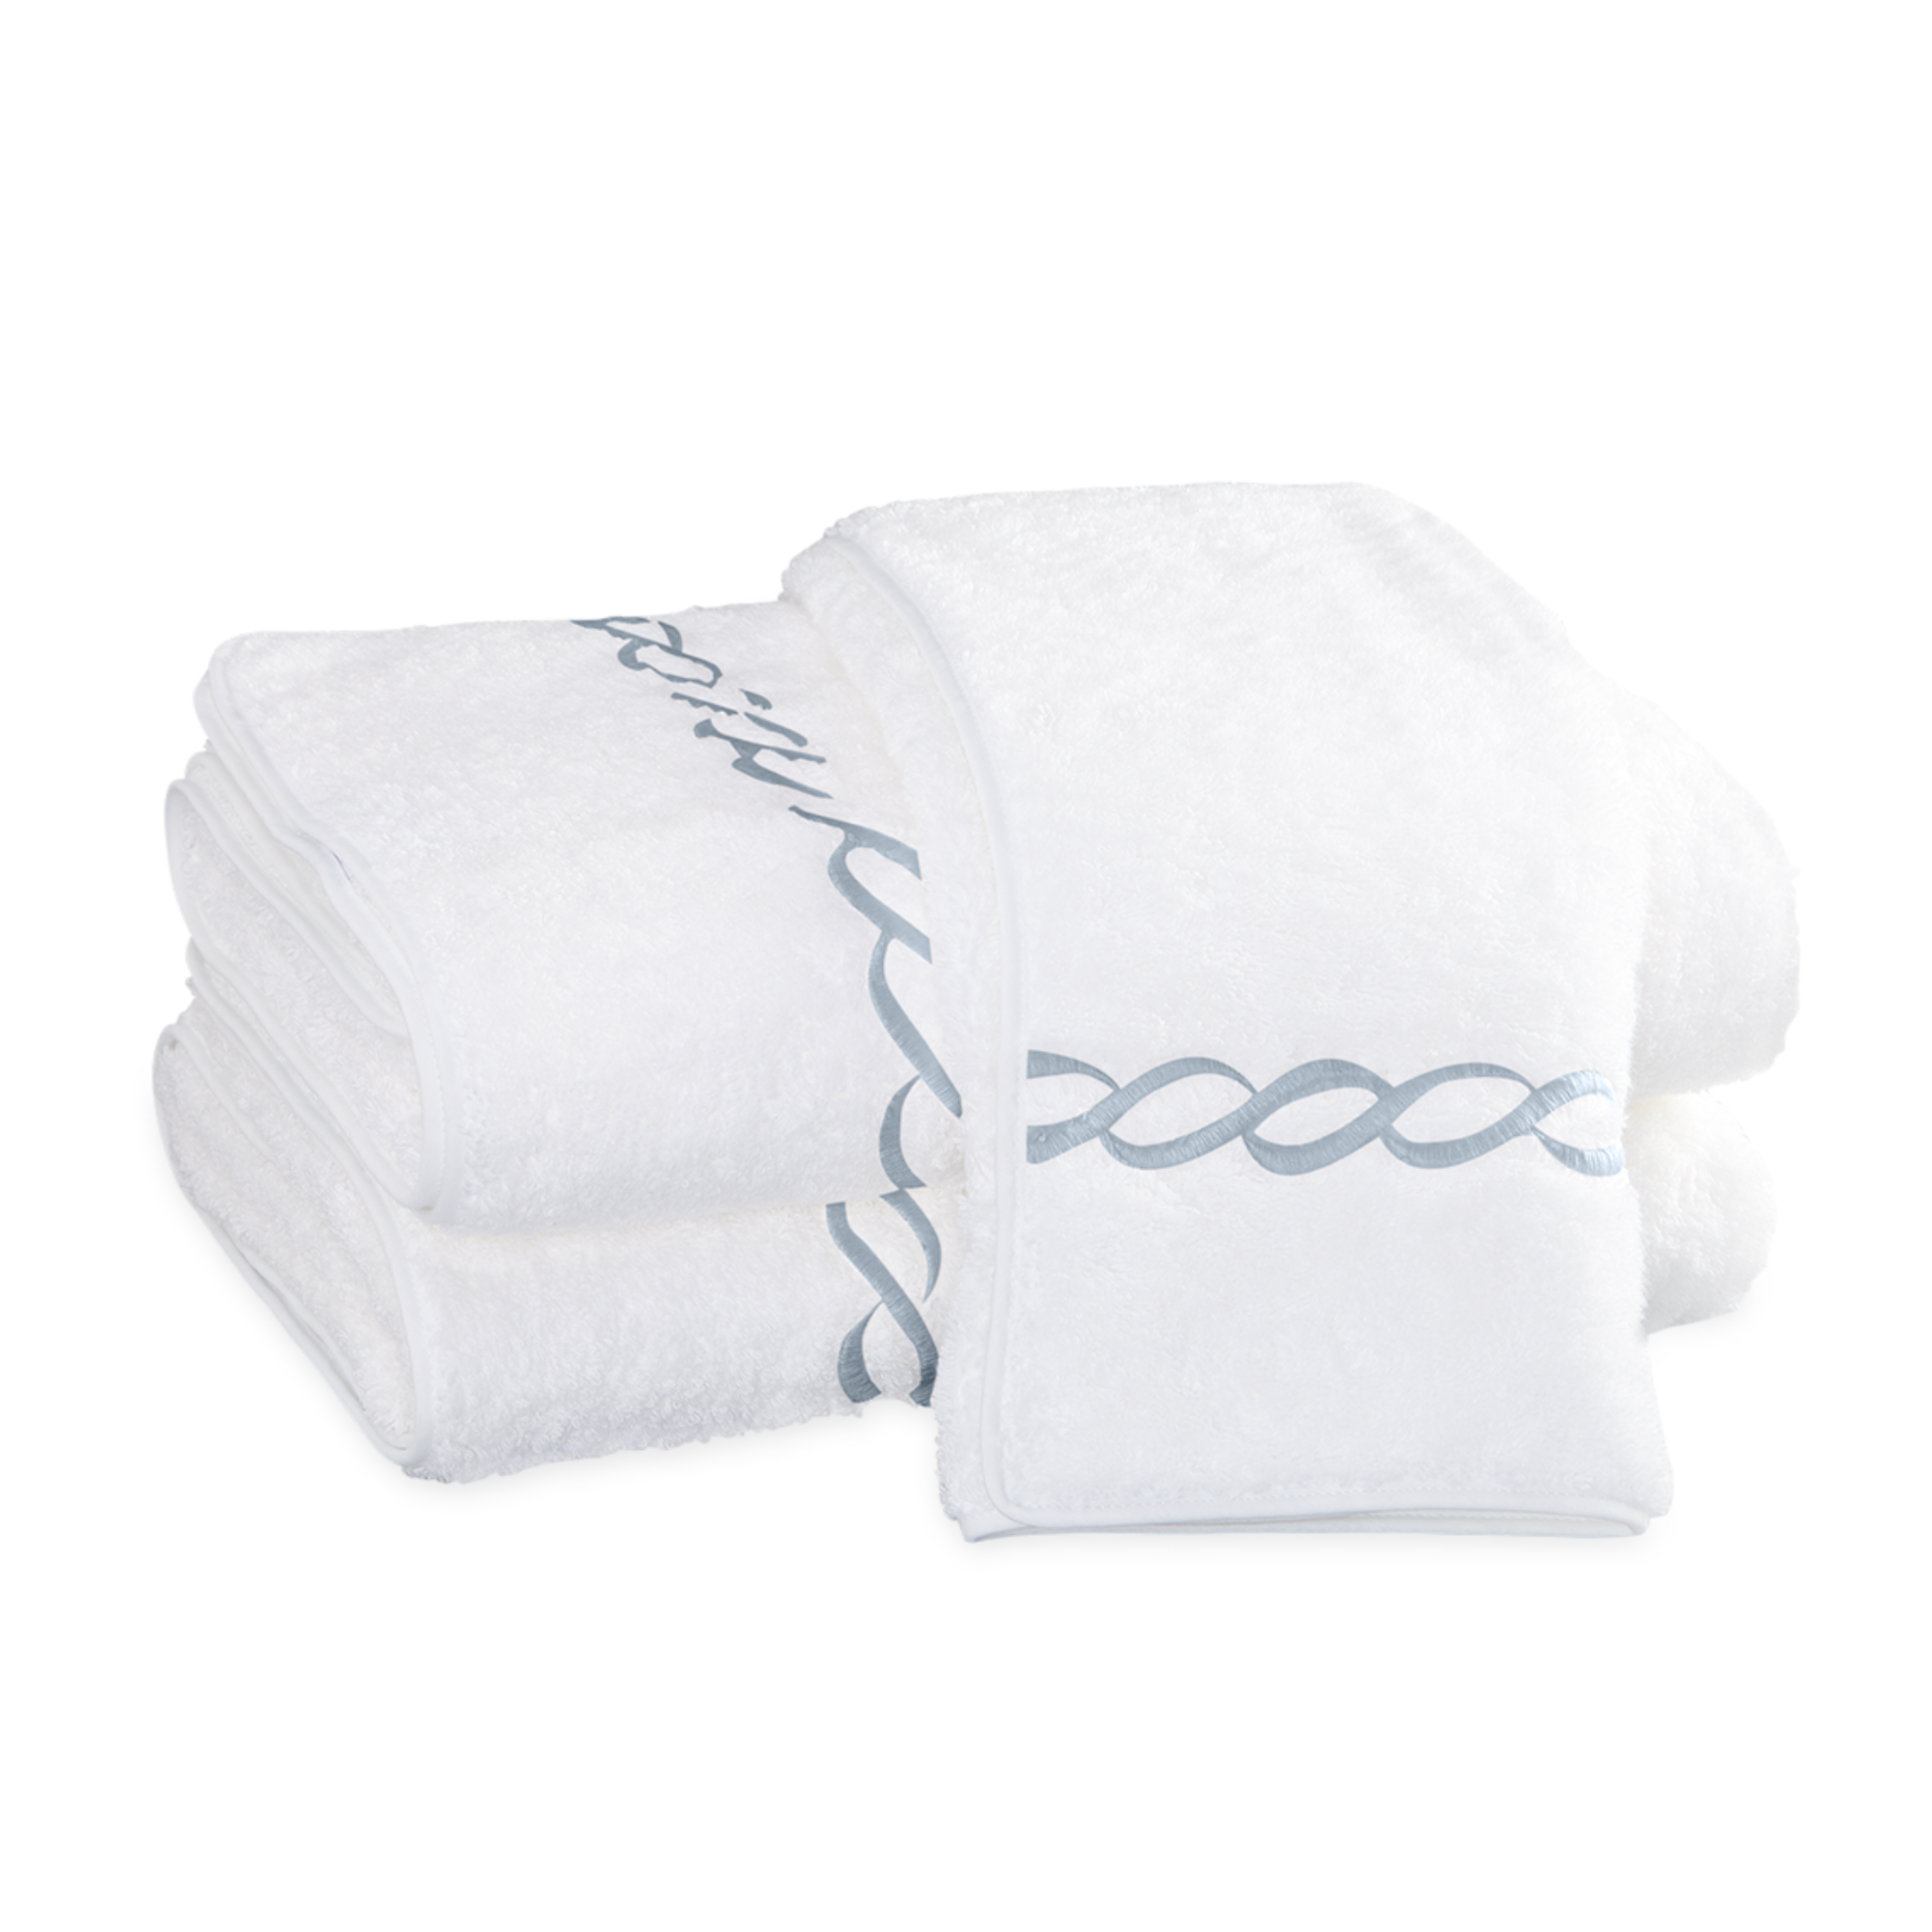 Folded Matouk Classic Chain Bath Towels in Color Lightblue